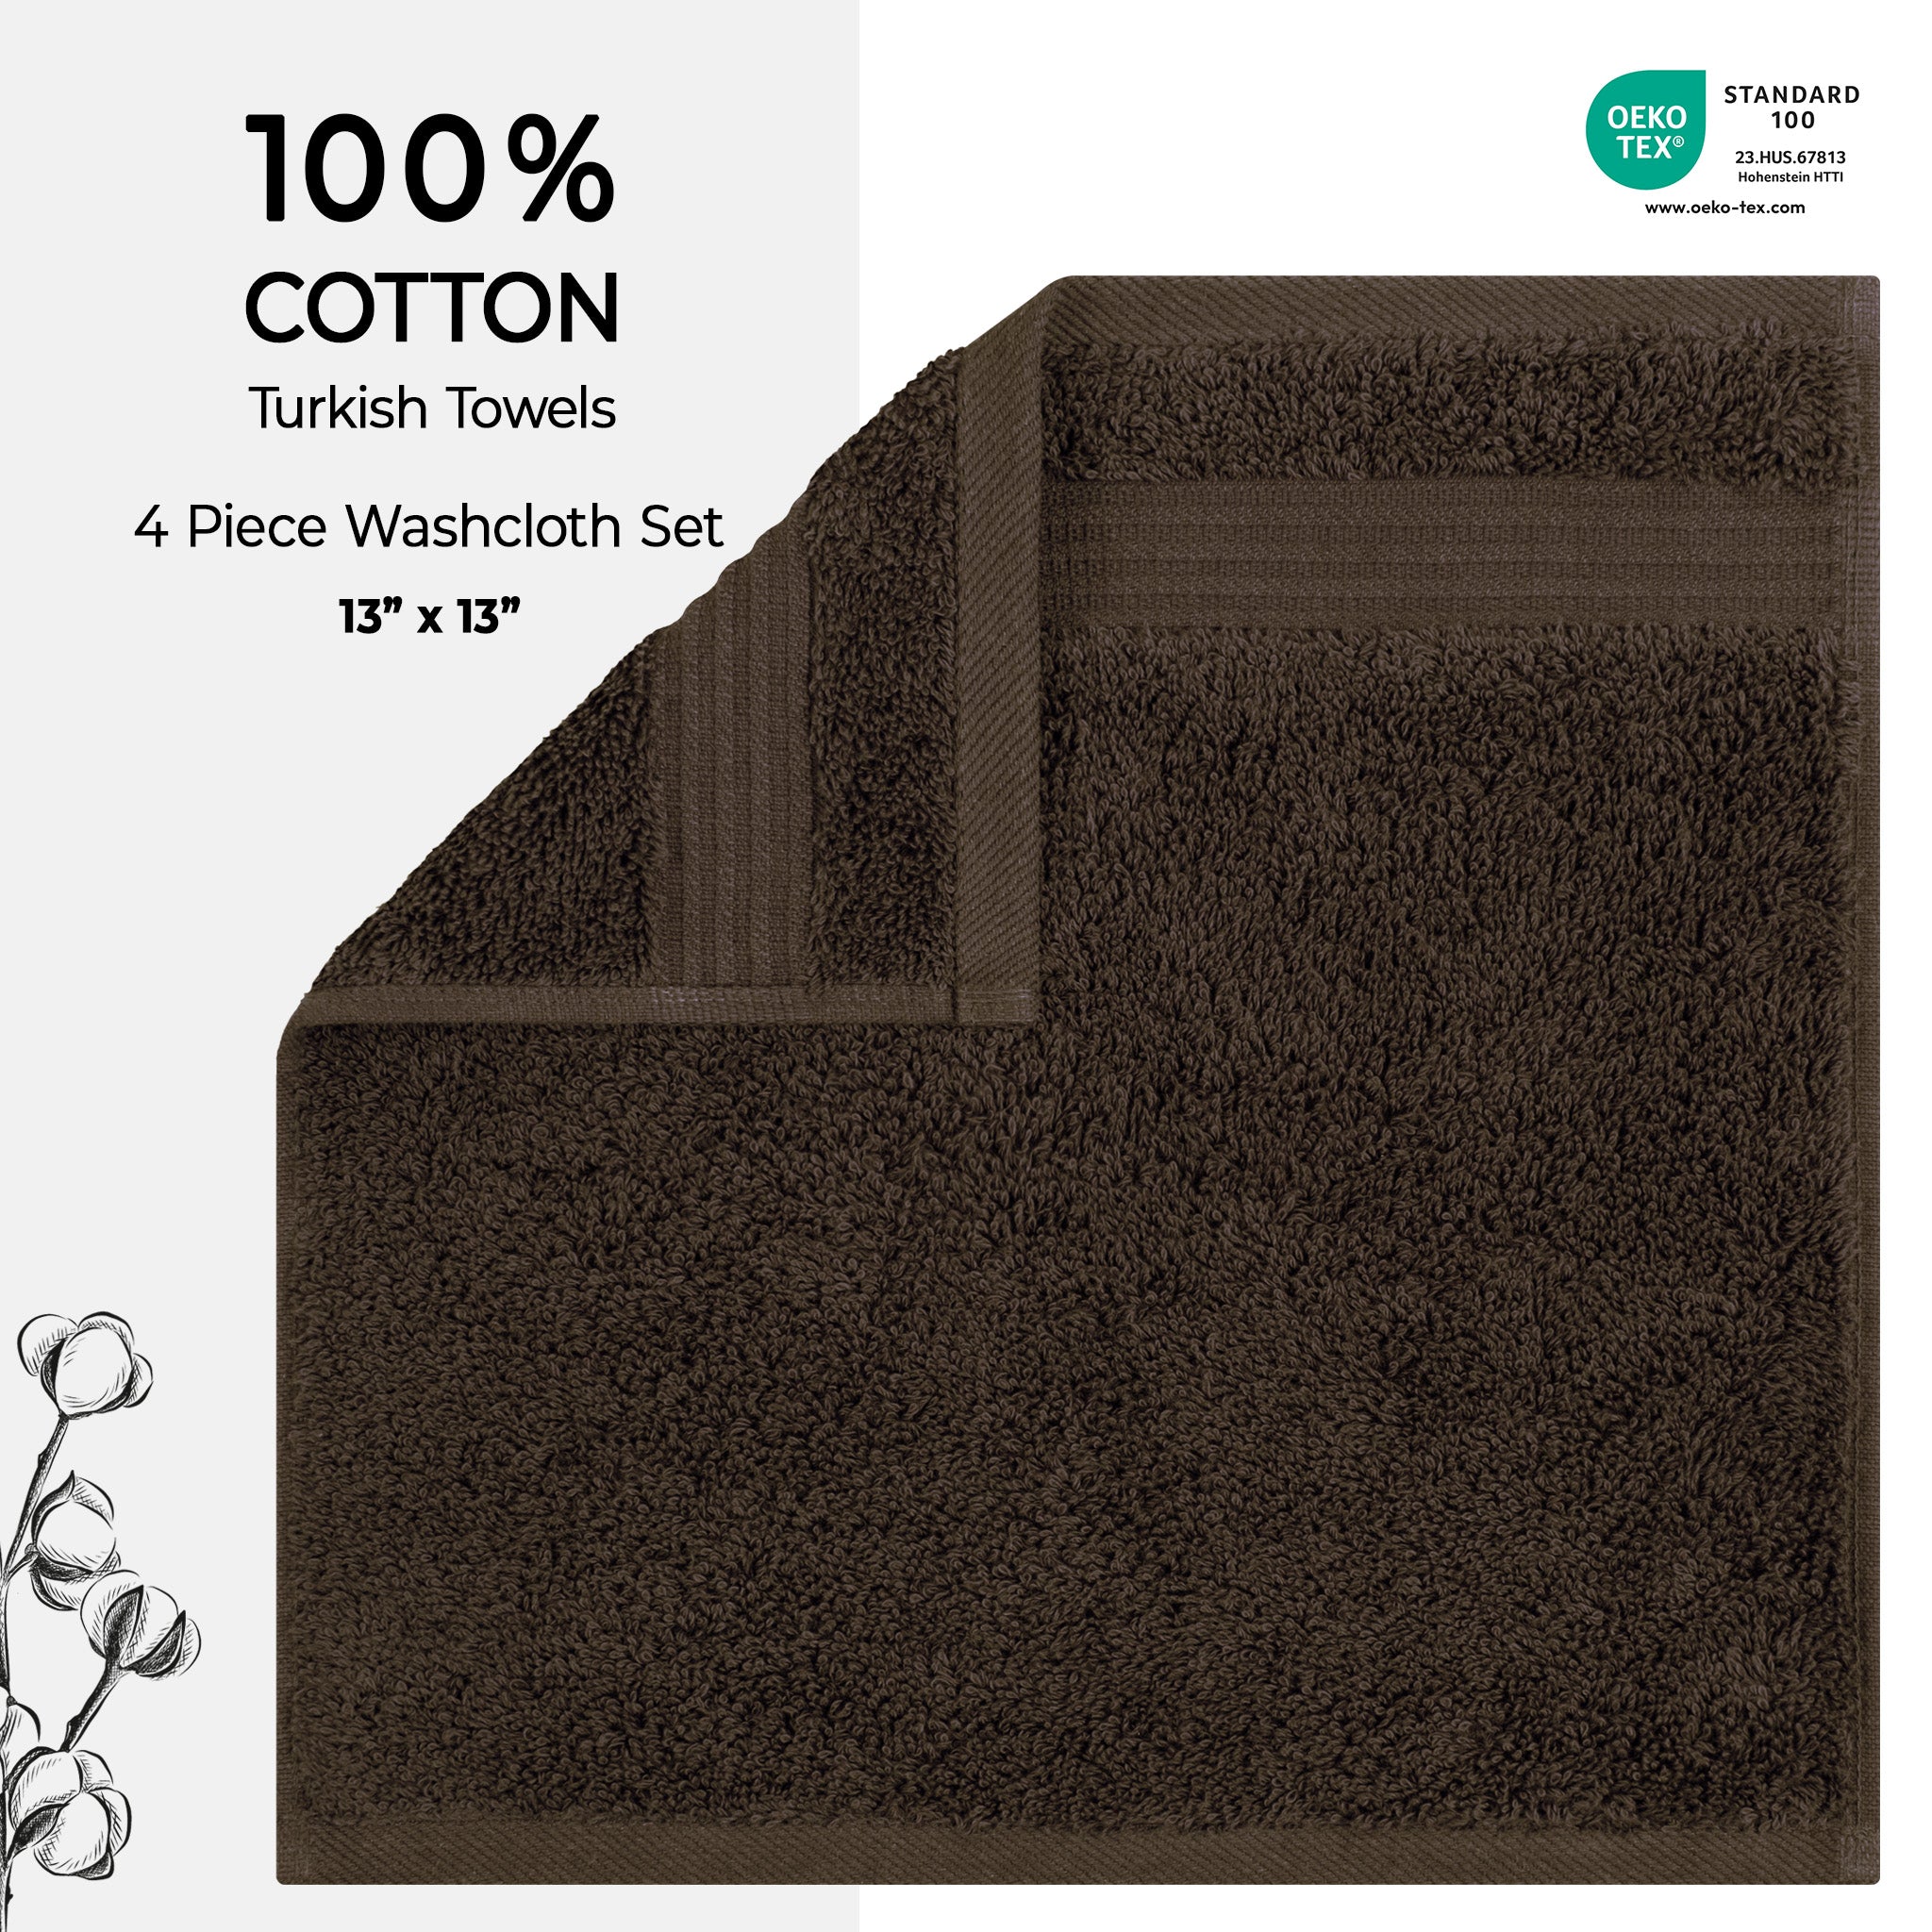 American Soft Linen Bekos 100% Cotton Turkish Towels, 4 Piece Washcloth Towel Set -chocolate-brown-02